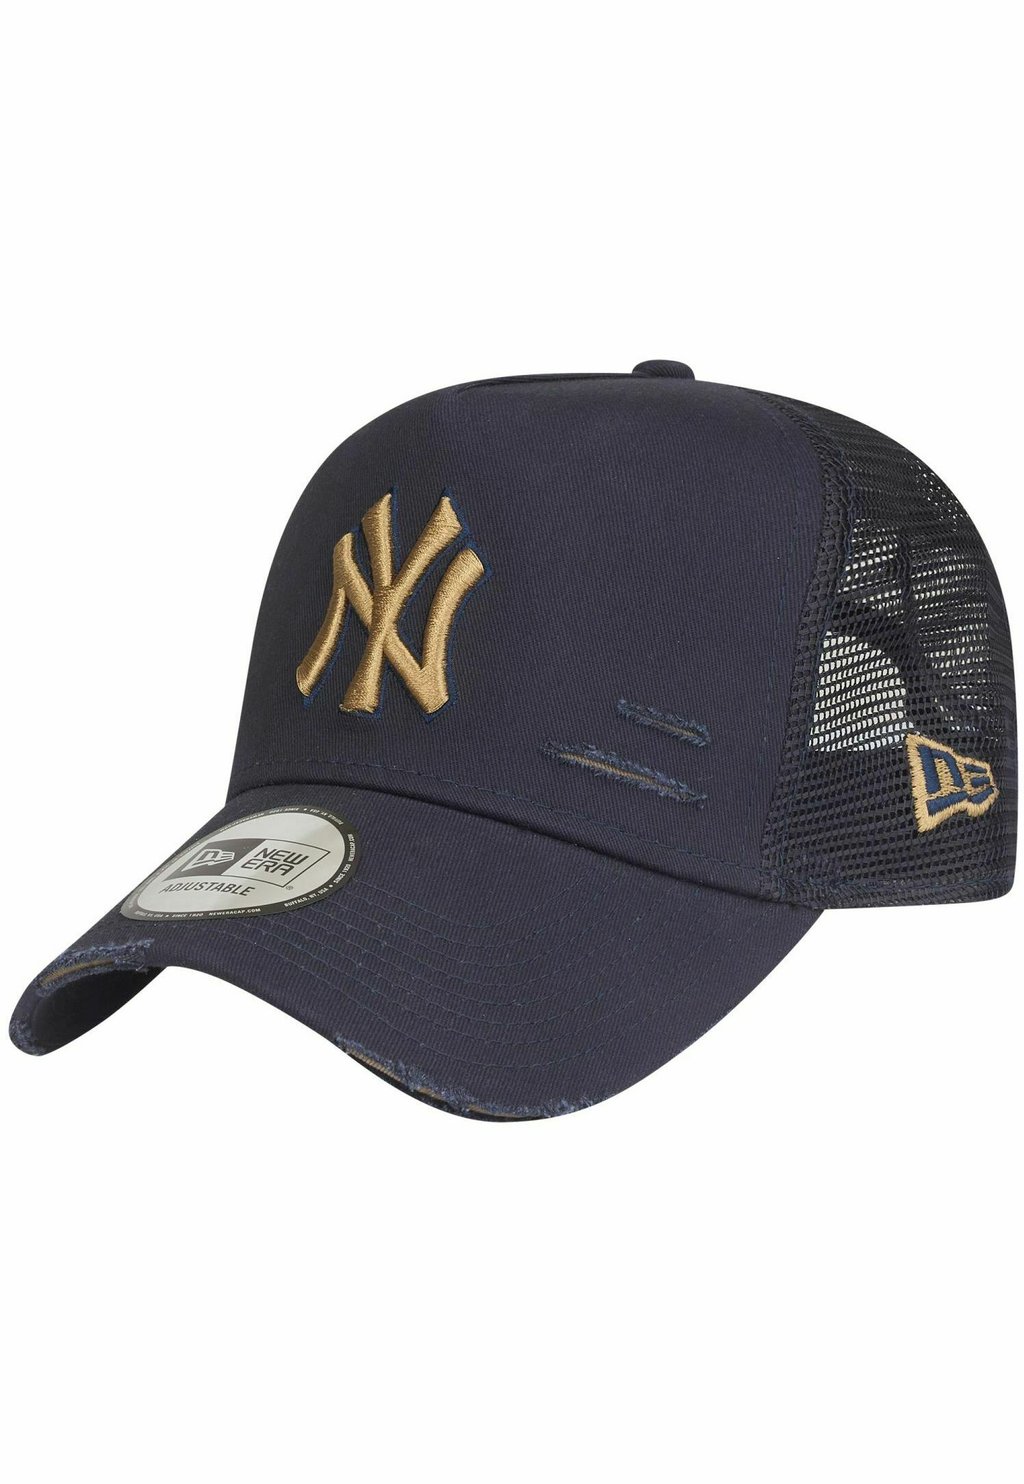 Бейсболка TRUCKER DISTRESSED NEW YORK YANKEES New Era, цвет navy